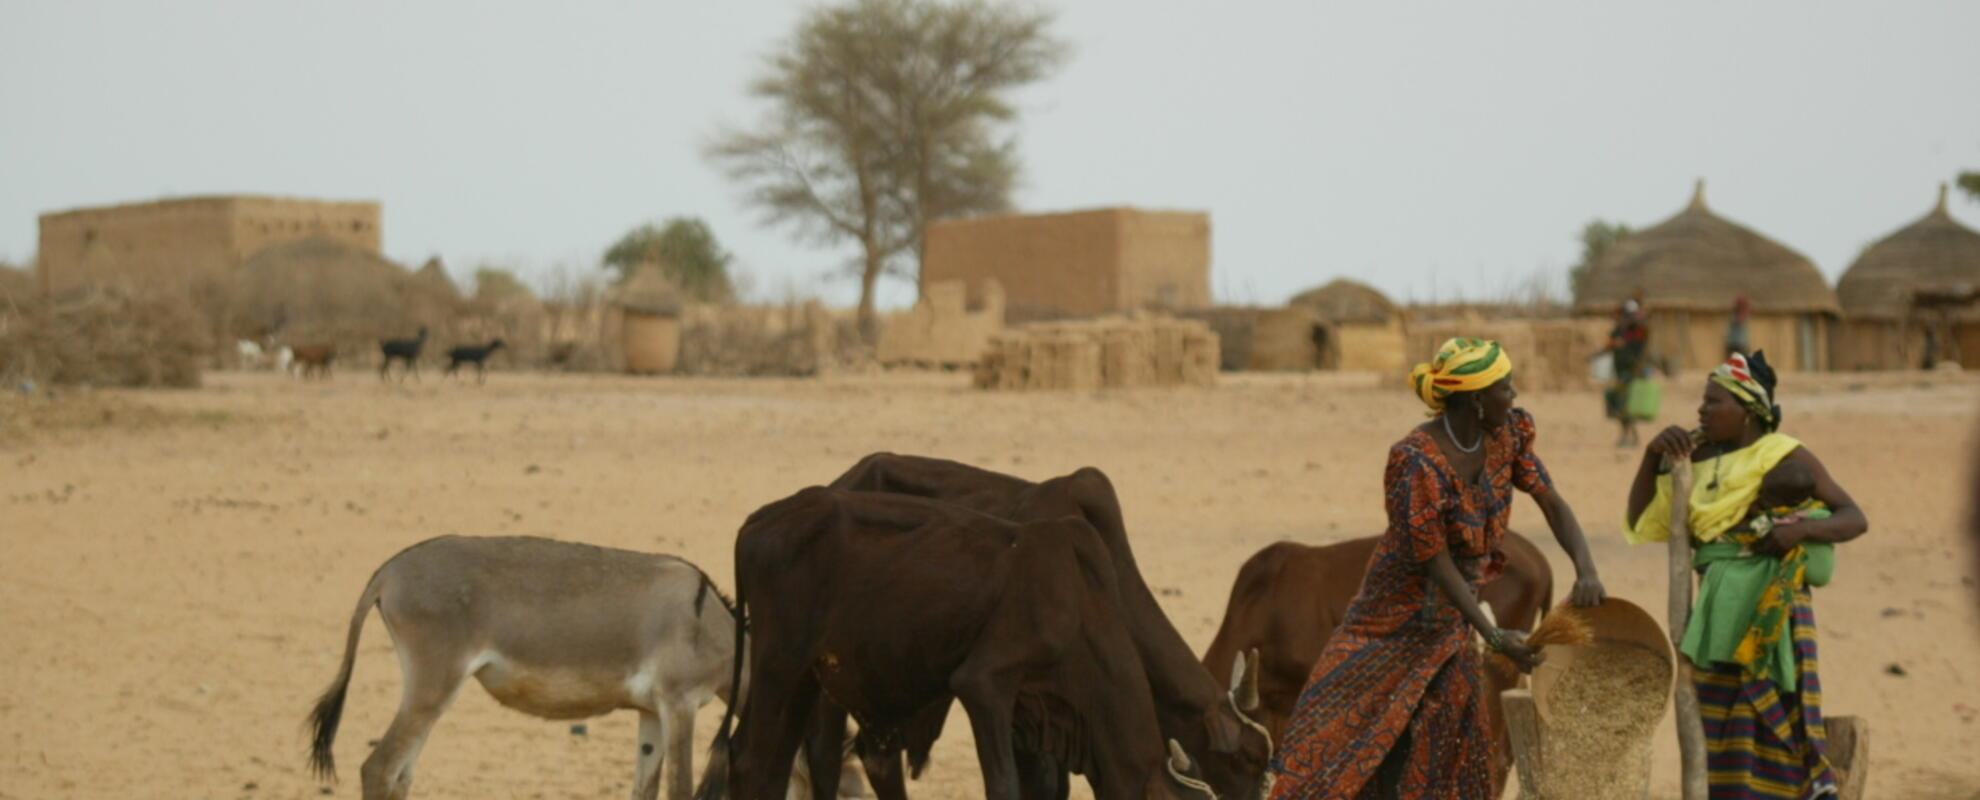 Aflatoxin-related health risk for milk consumers in rural and peri-urban areas in Burkina Faso